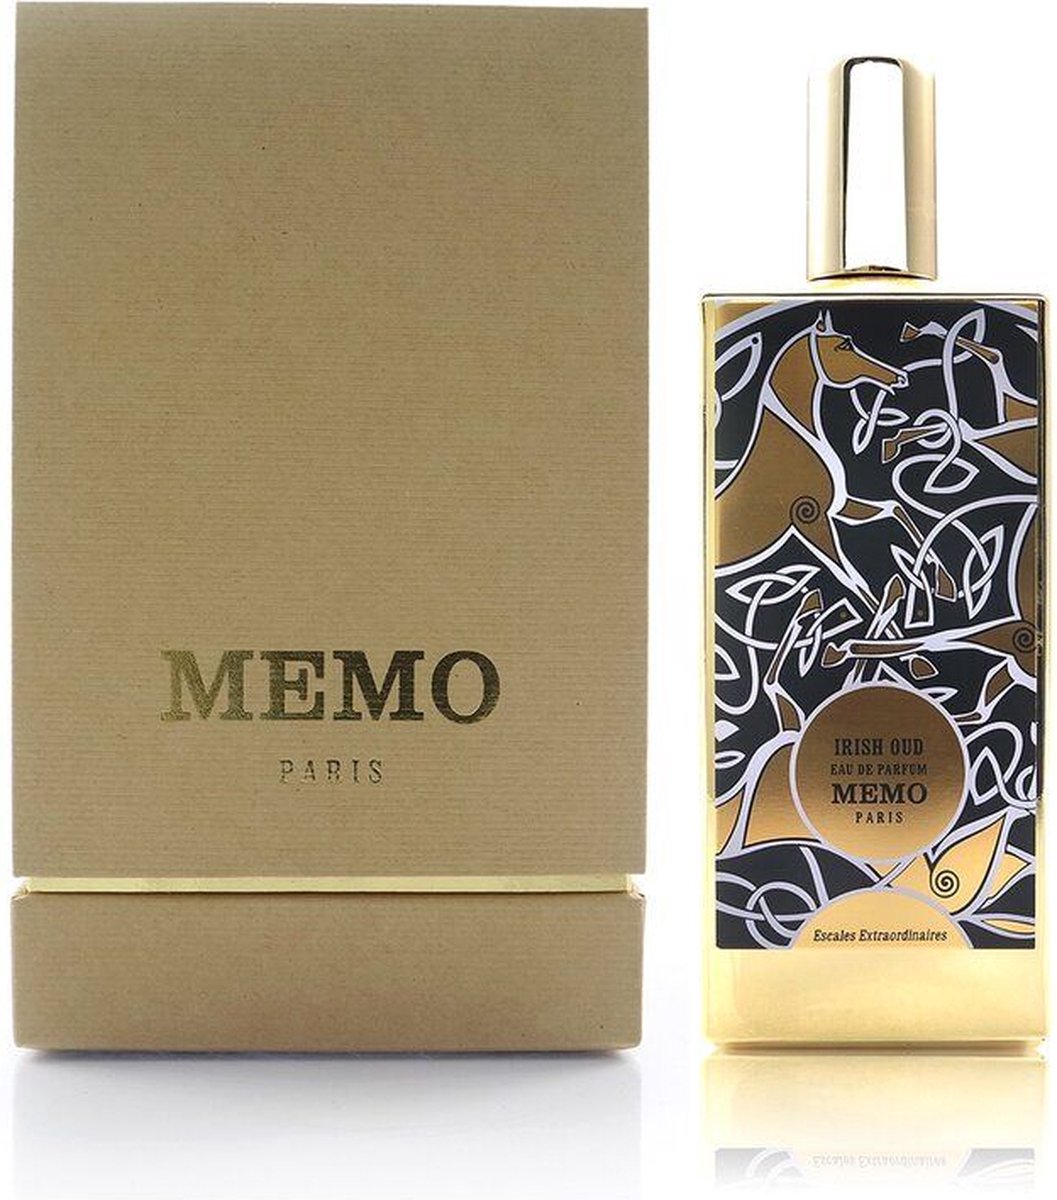 Memo Paris Irish Oud eau de parfum 75ml